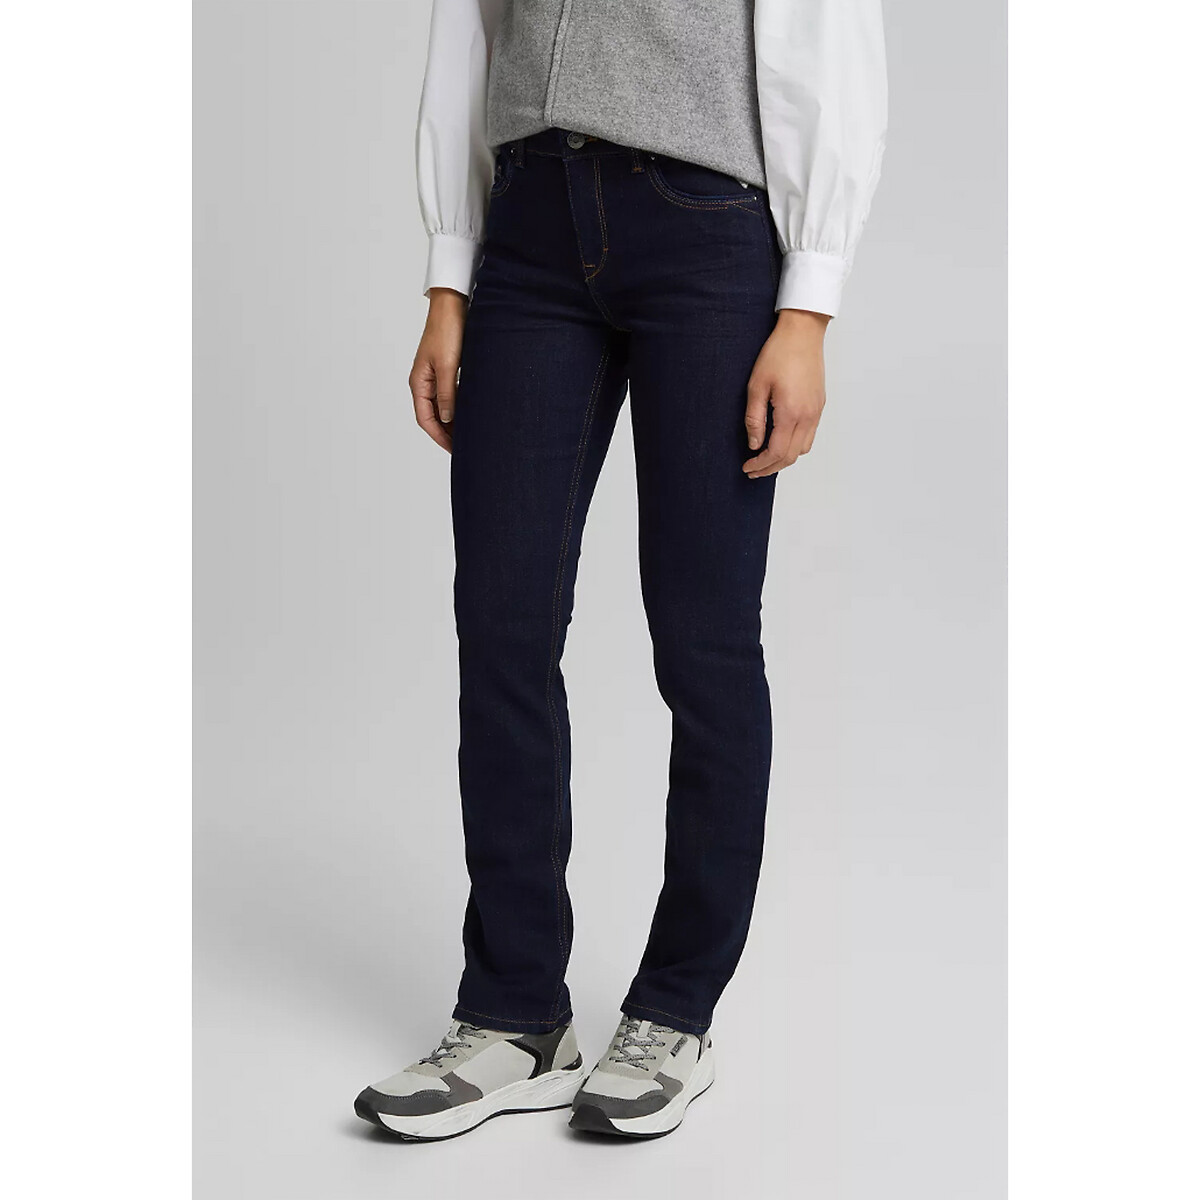 Esprit Stretch jeans in 5 pocketsstijl in rechte shape online kopen